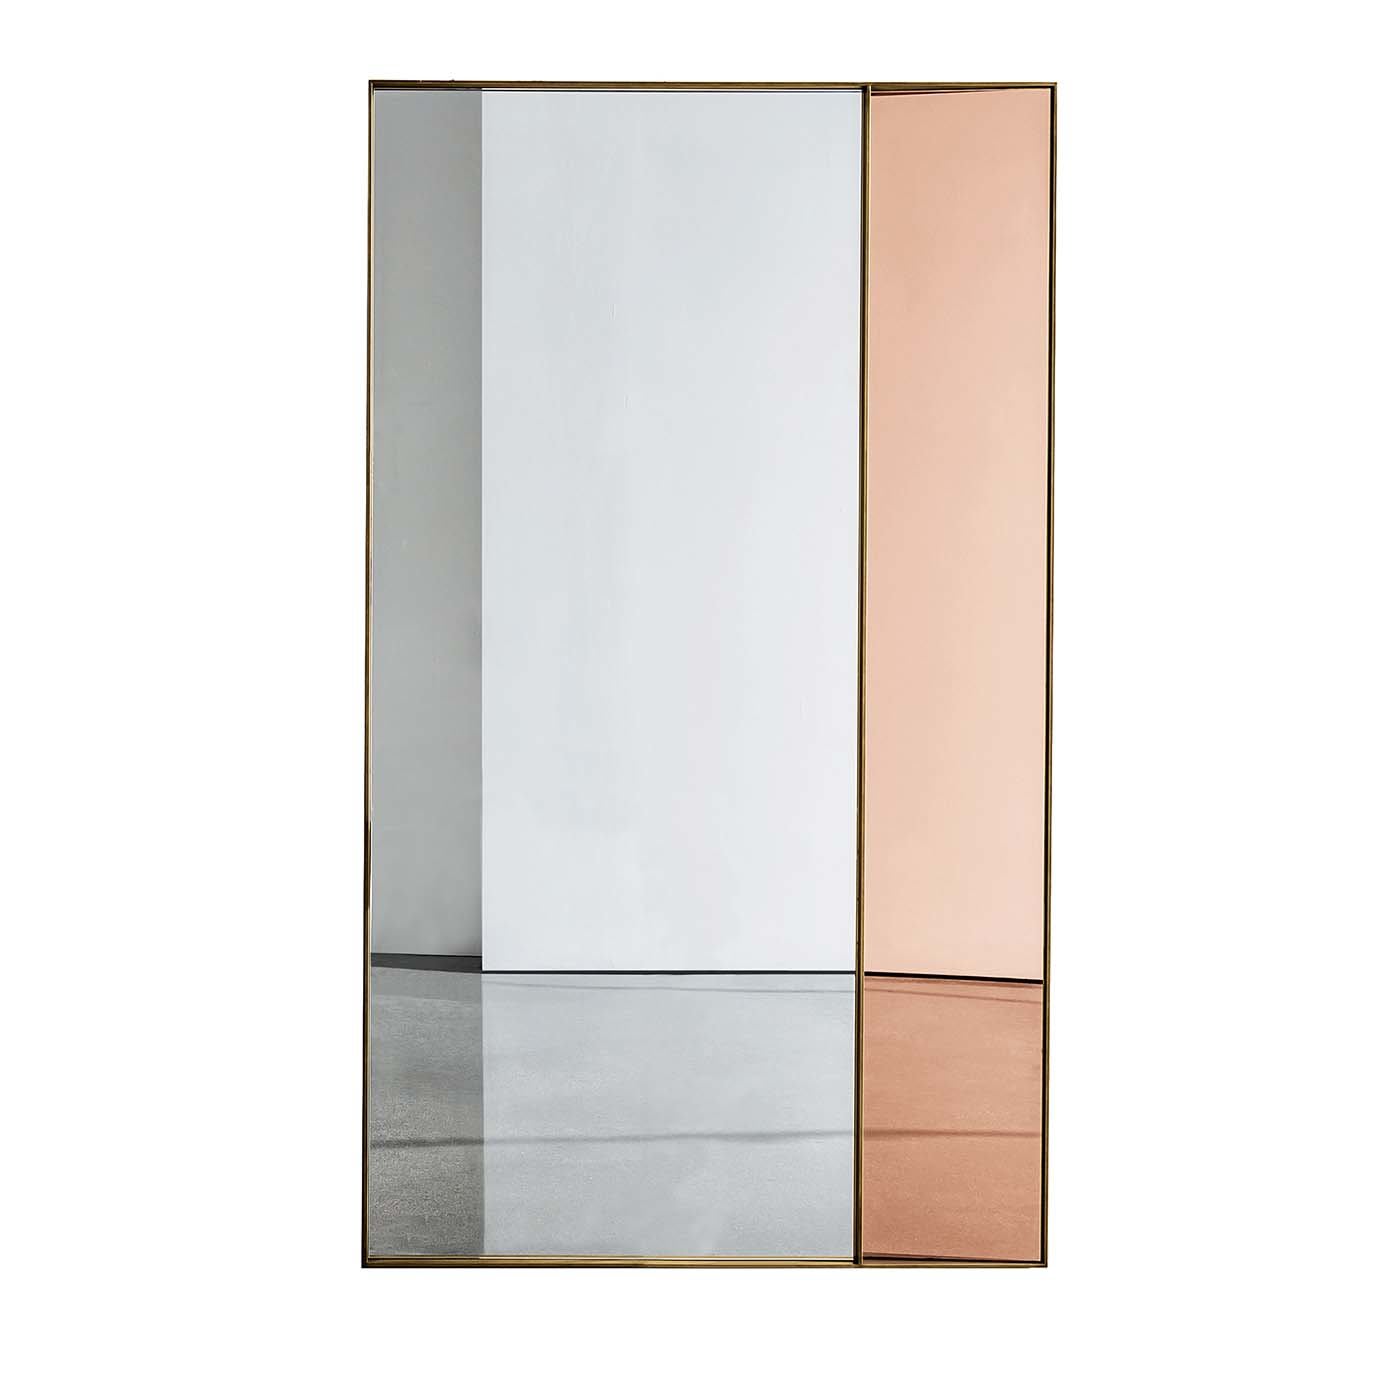 Campos Mirror in Extralight and Rose - Società Vetraria Trevigiana